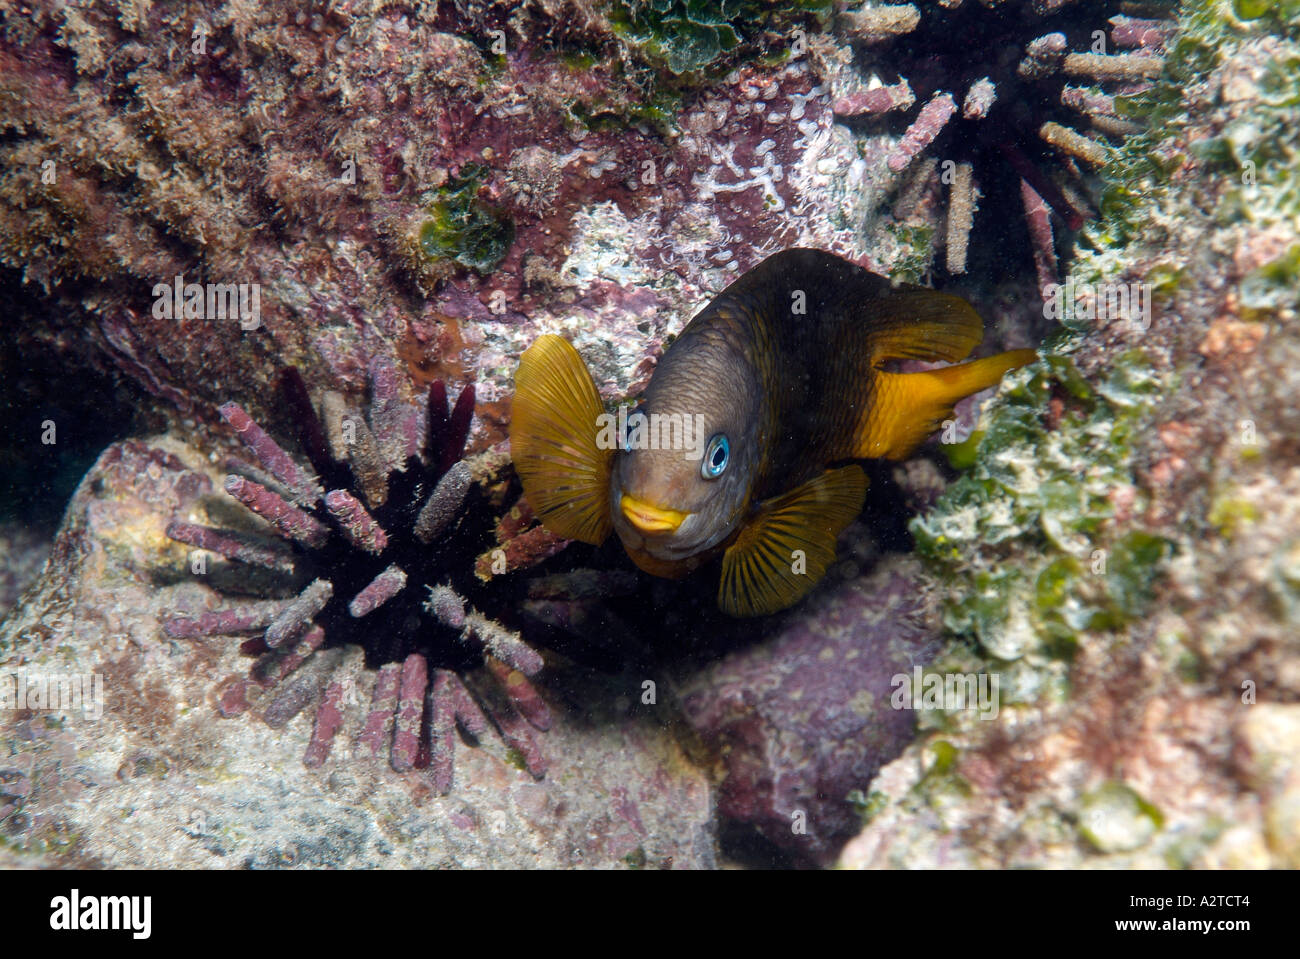 Yellowtail Damselfish in the Pacific Ocean. Stock Photo